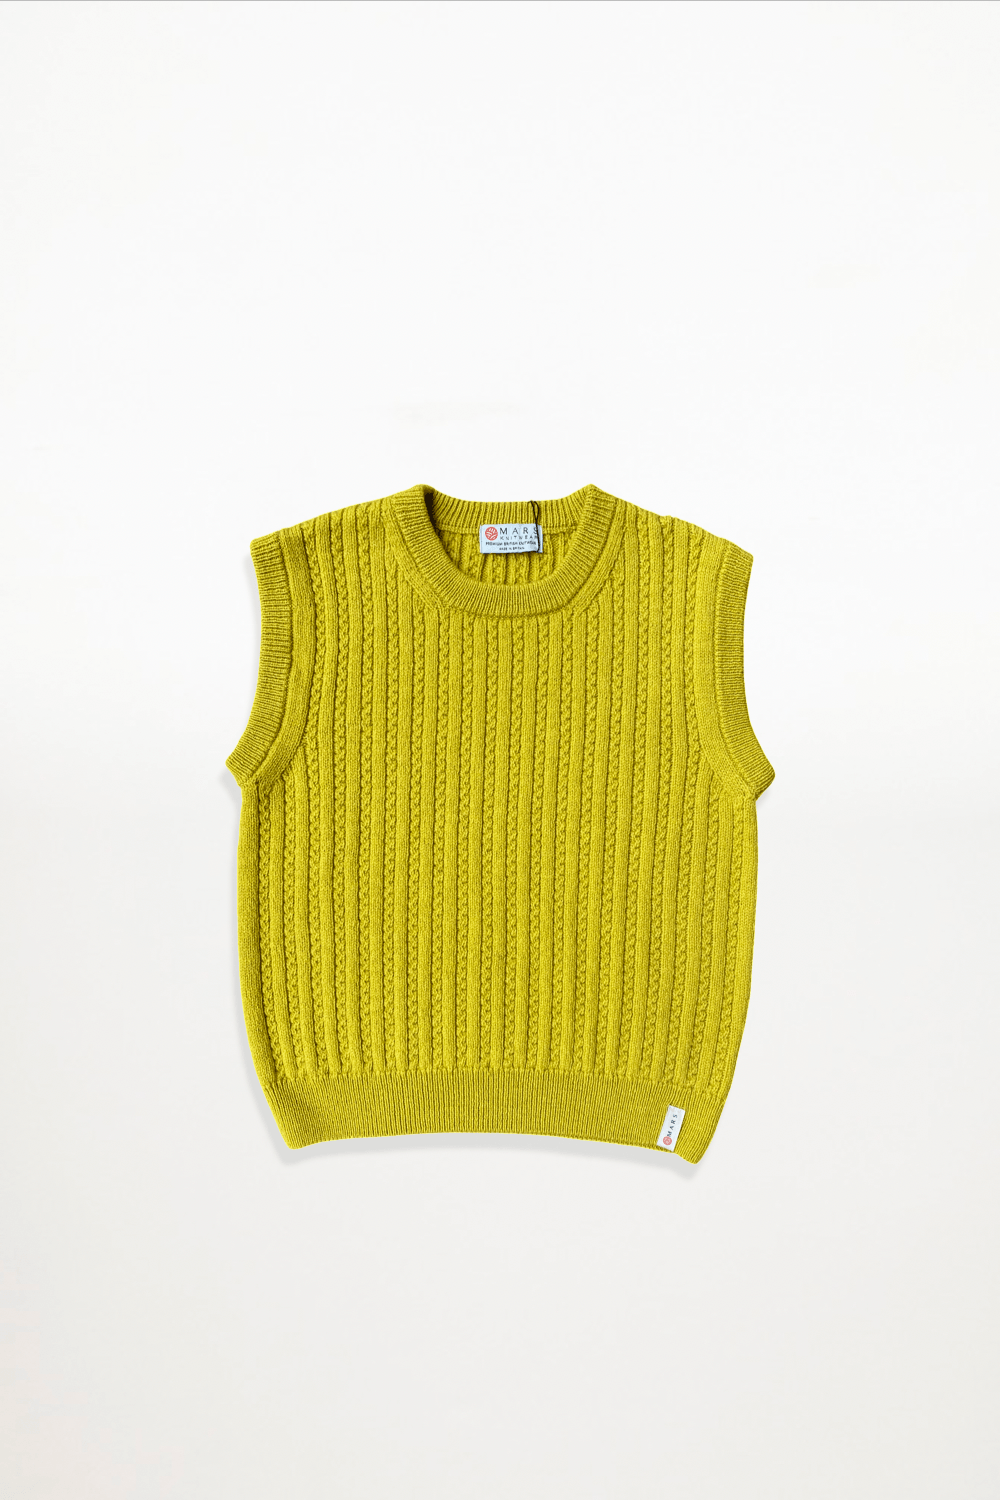 Mars Knitwear - Merino Wool Vest - Citron - Ensemble Studios